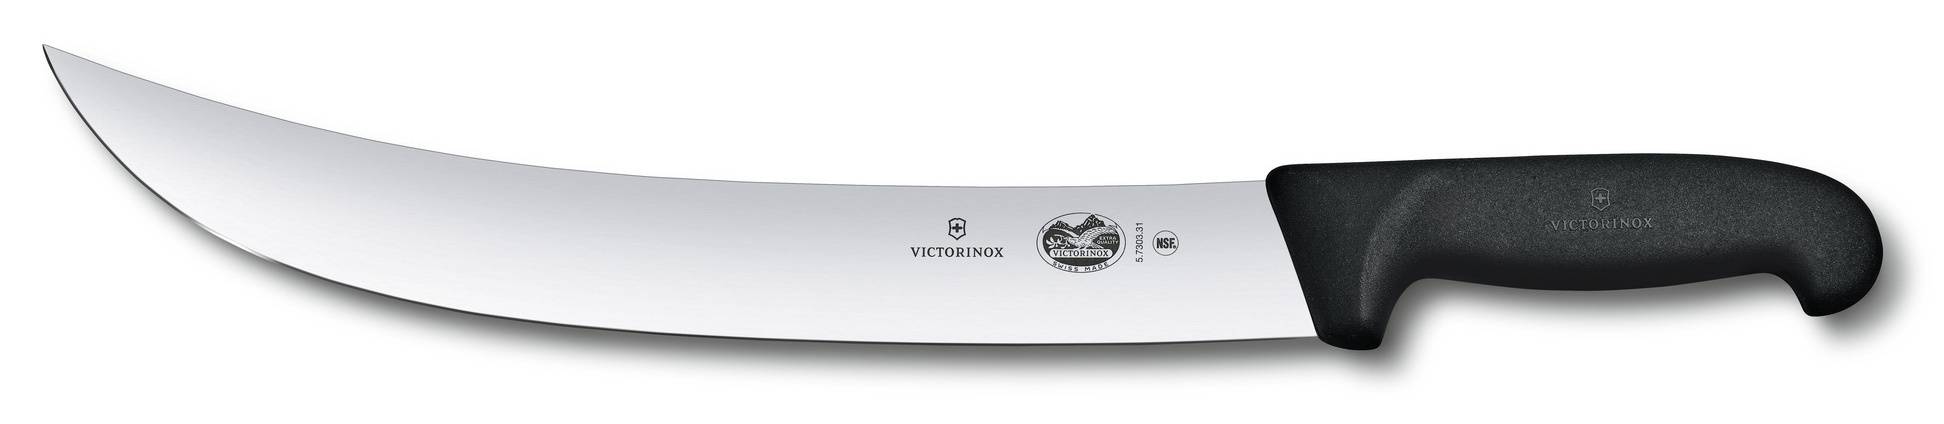 Нож Victorinox Fibrox черный (5.7303.31)